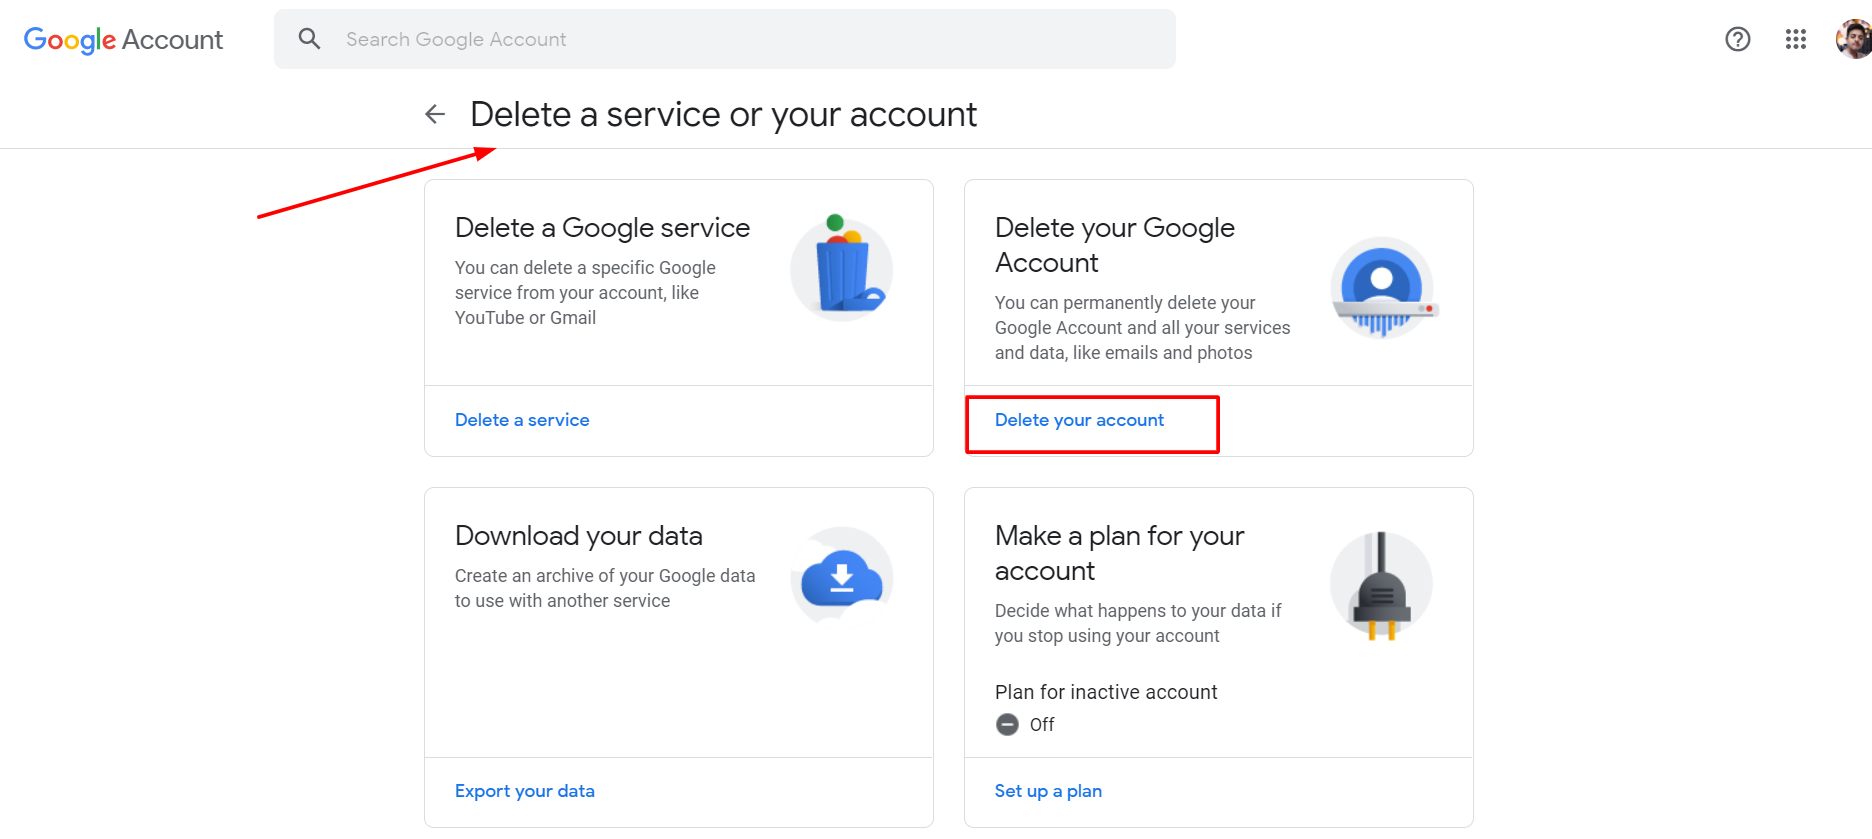 Google account - Delete your account